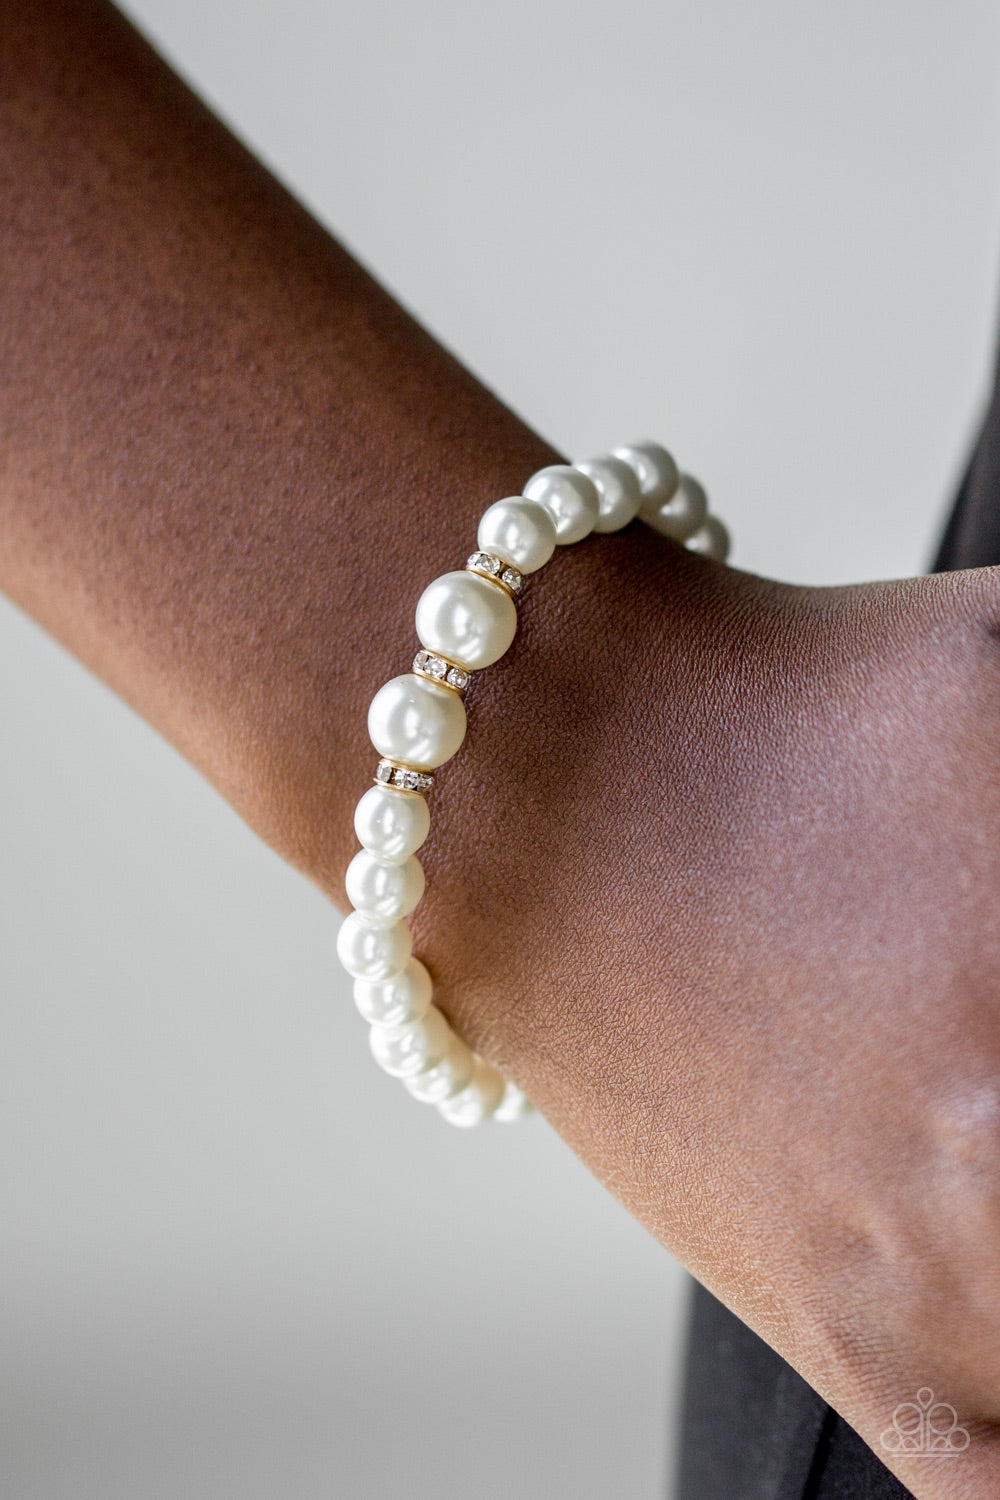 Paparazzi Radiantly Royal - Gold - White Pearls and Rhinestones - Bracelet - $5 Jewelry With Ashley Swint